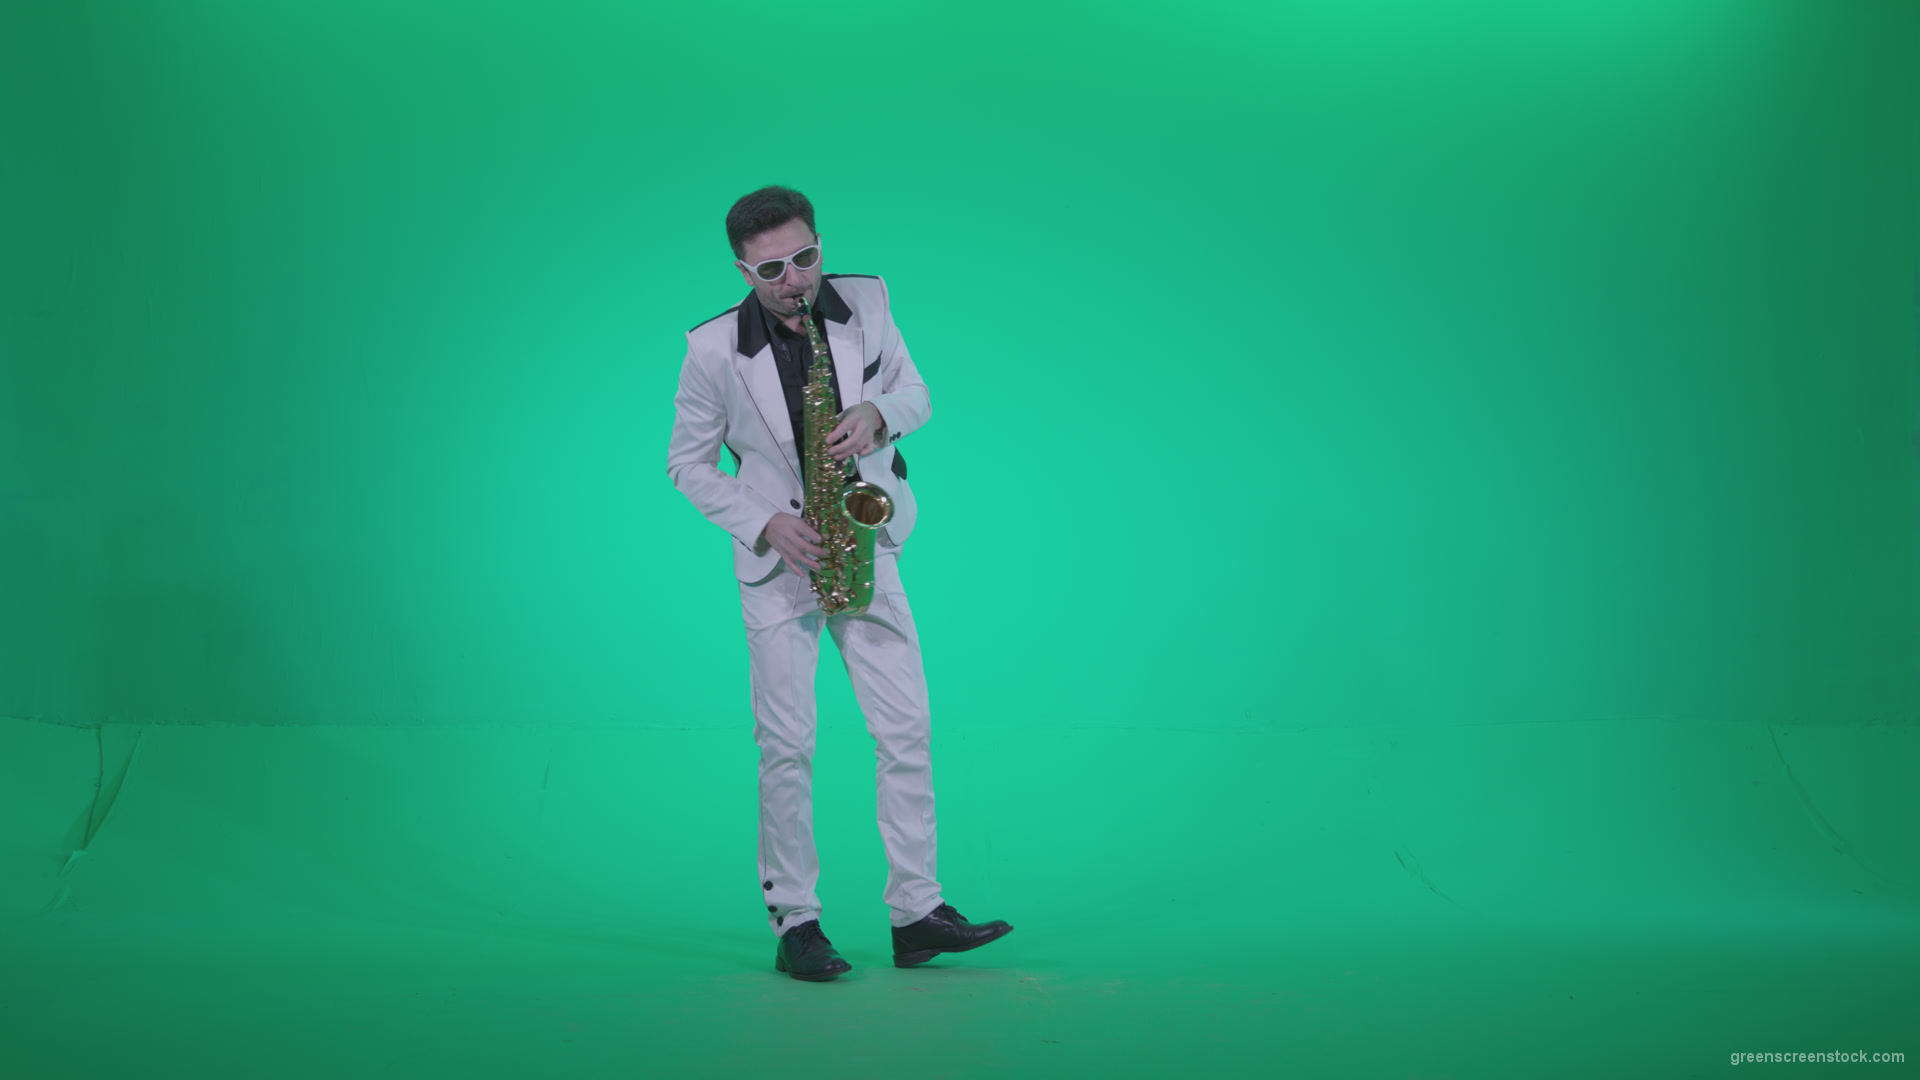 Saxophone-Virtuoso-Performer-s2_008 Green Screen Stock